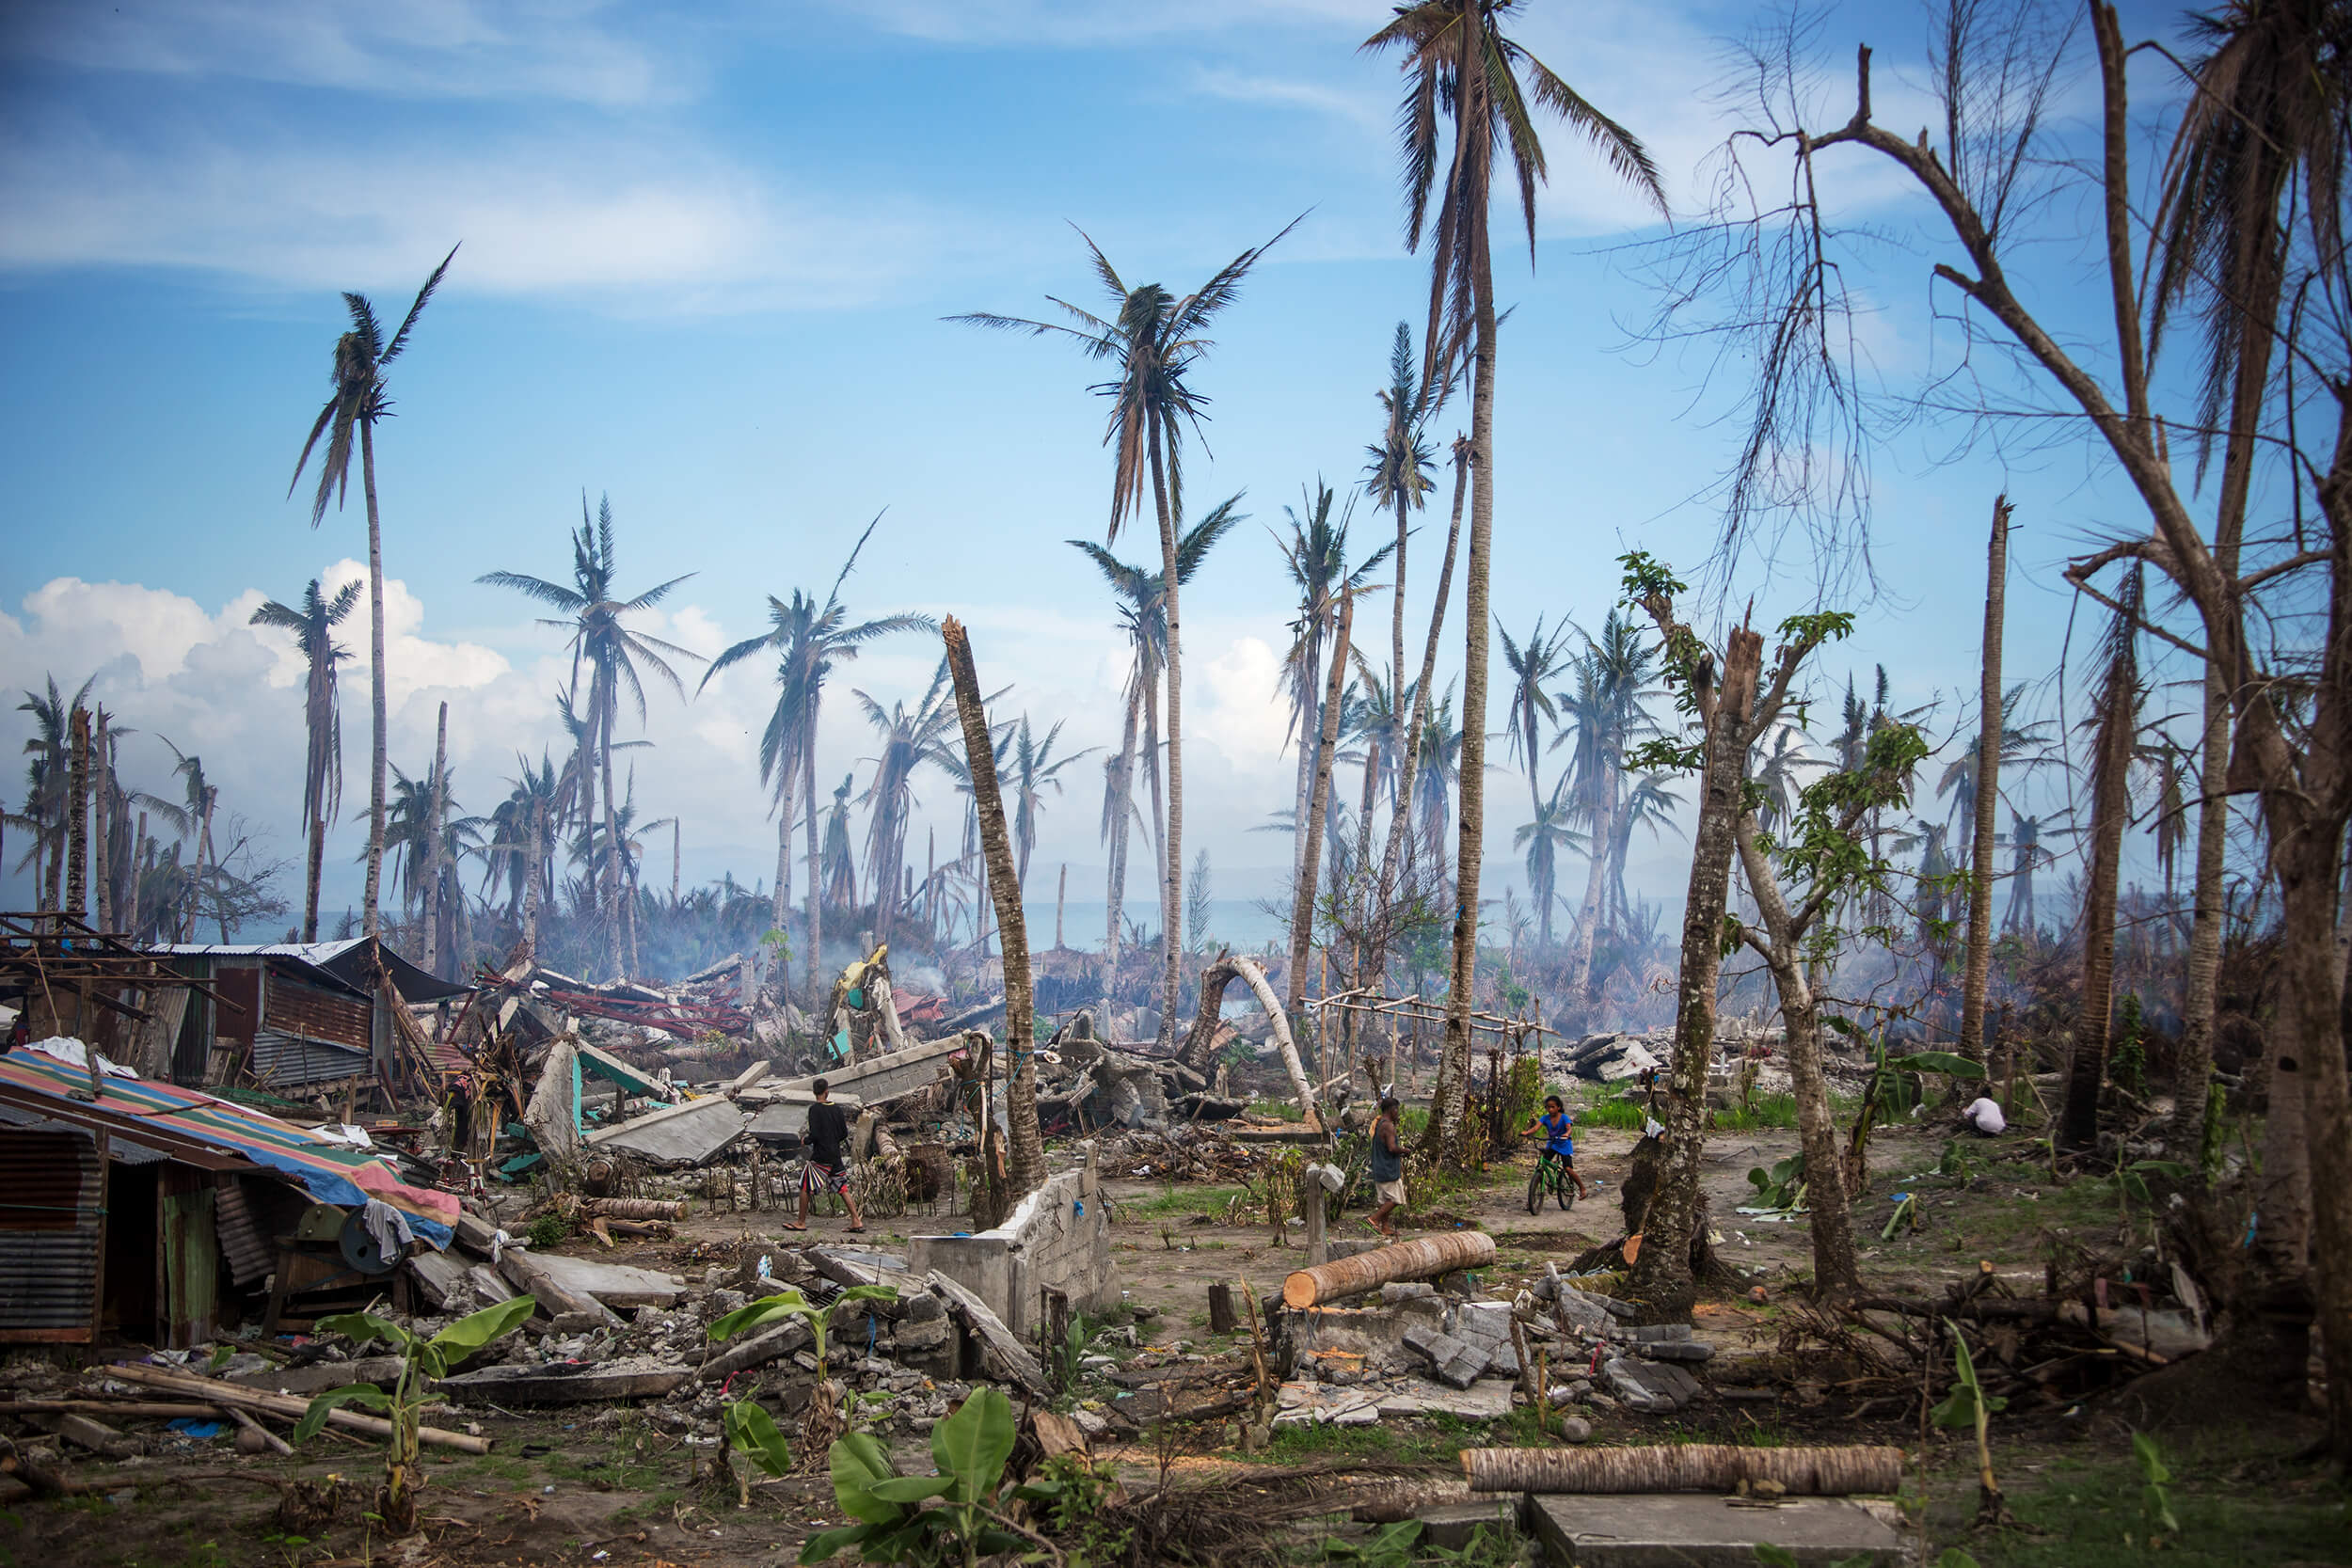  Philippines after Typhoon Haiyan November 2013. 